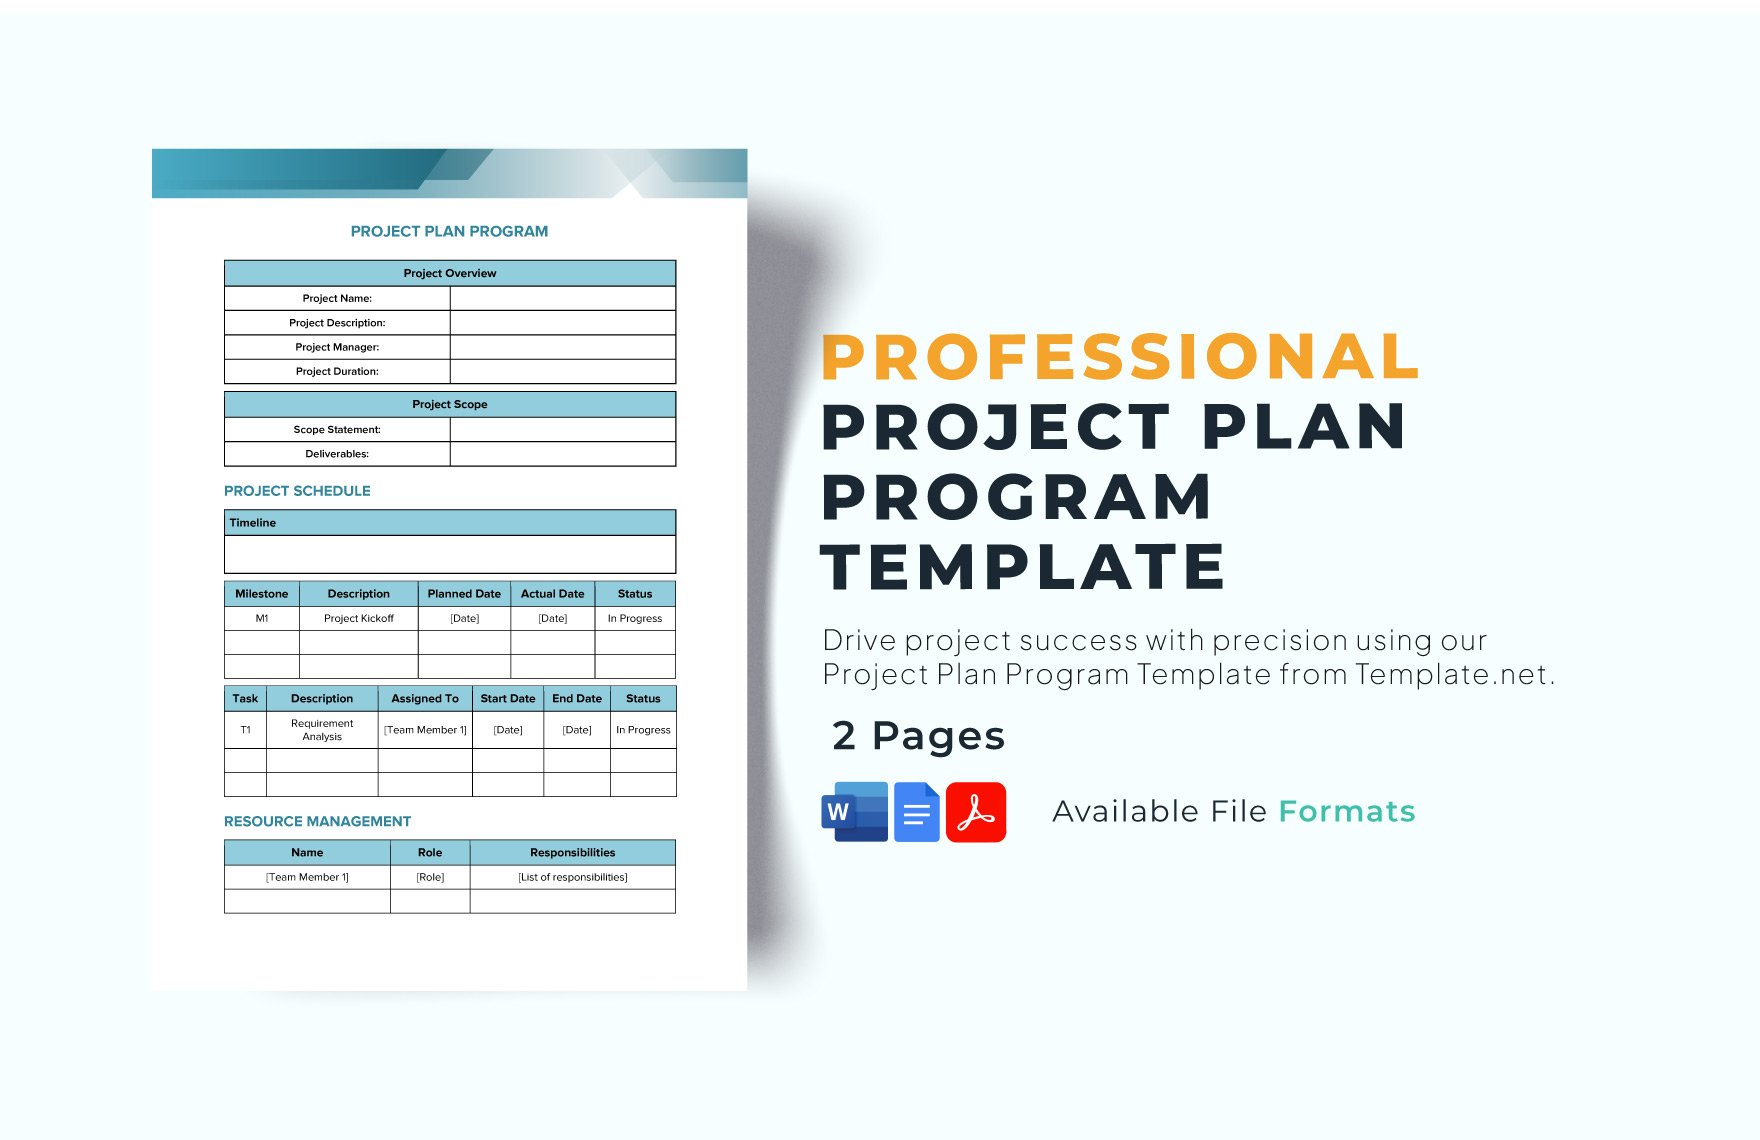 Project Plan Program Template in Word, Google Docs, PDF